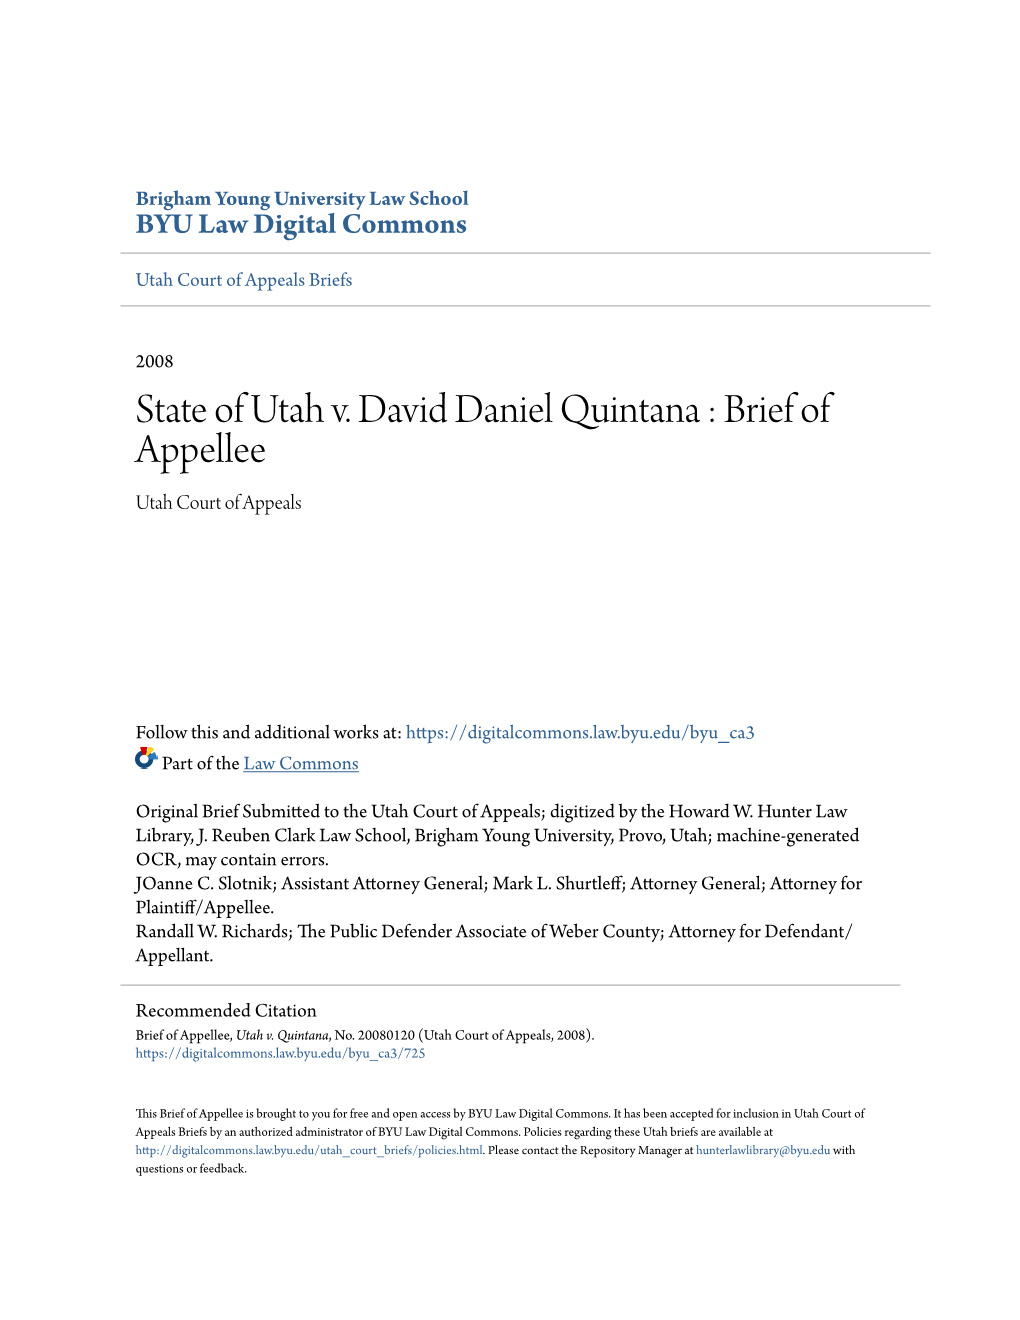 State of Utah V. David Daniel Quintana : Brief of Appellee Utah Court of Appeals